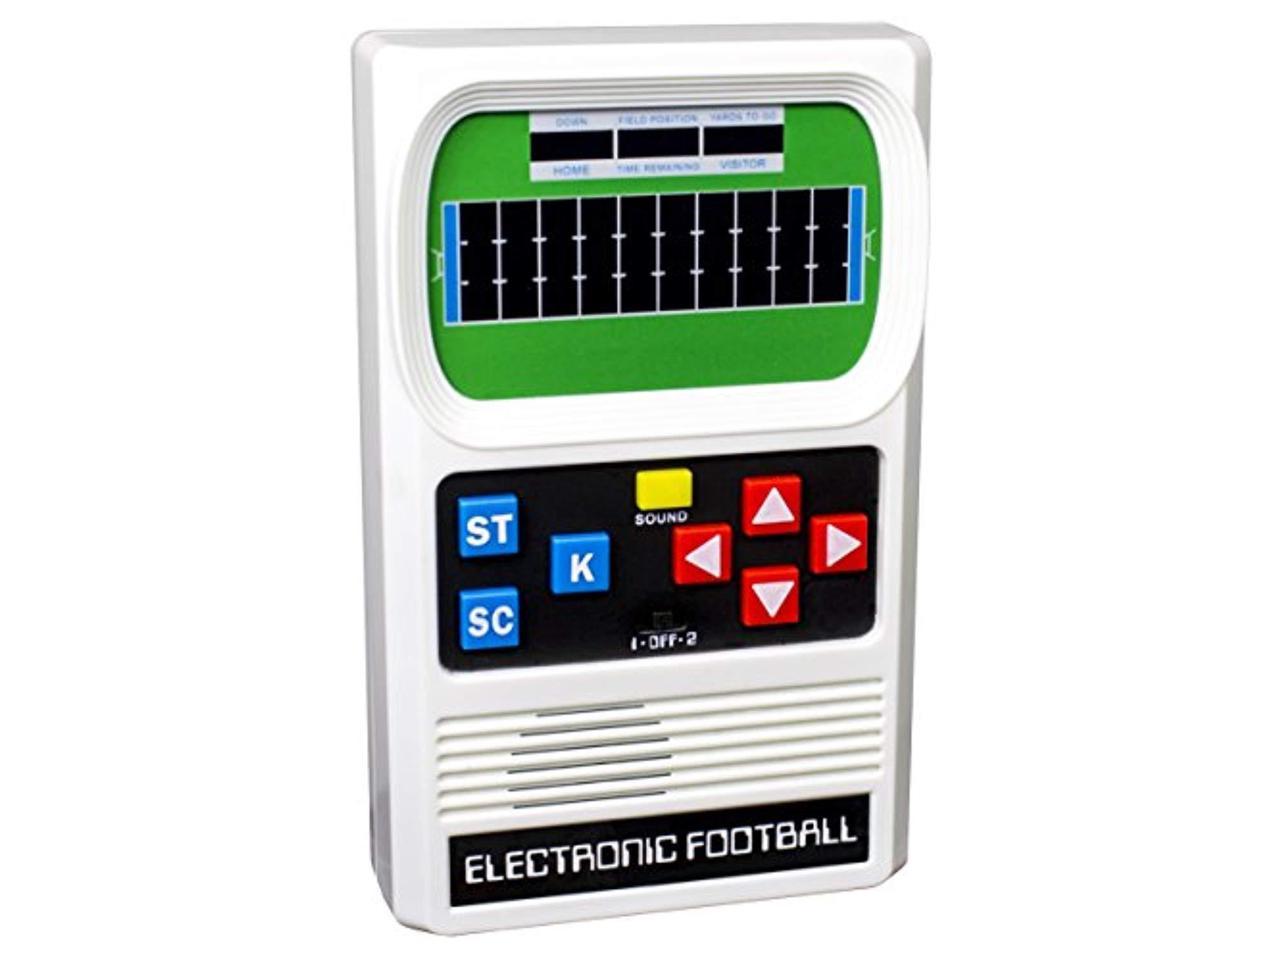 classic handheld football game